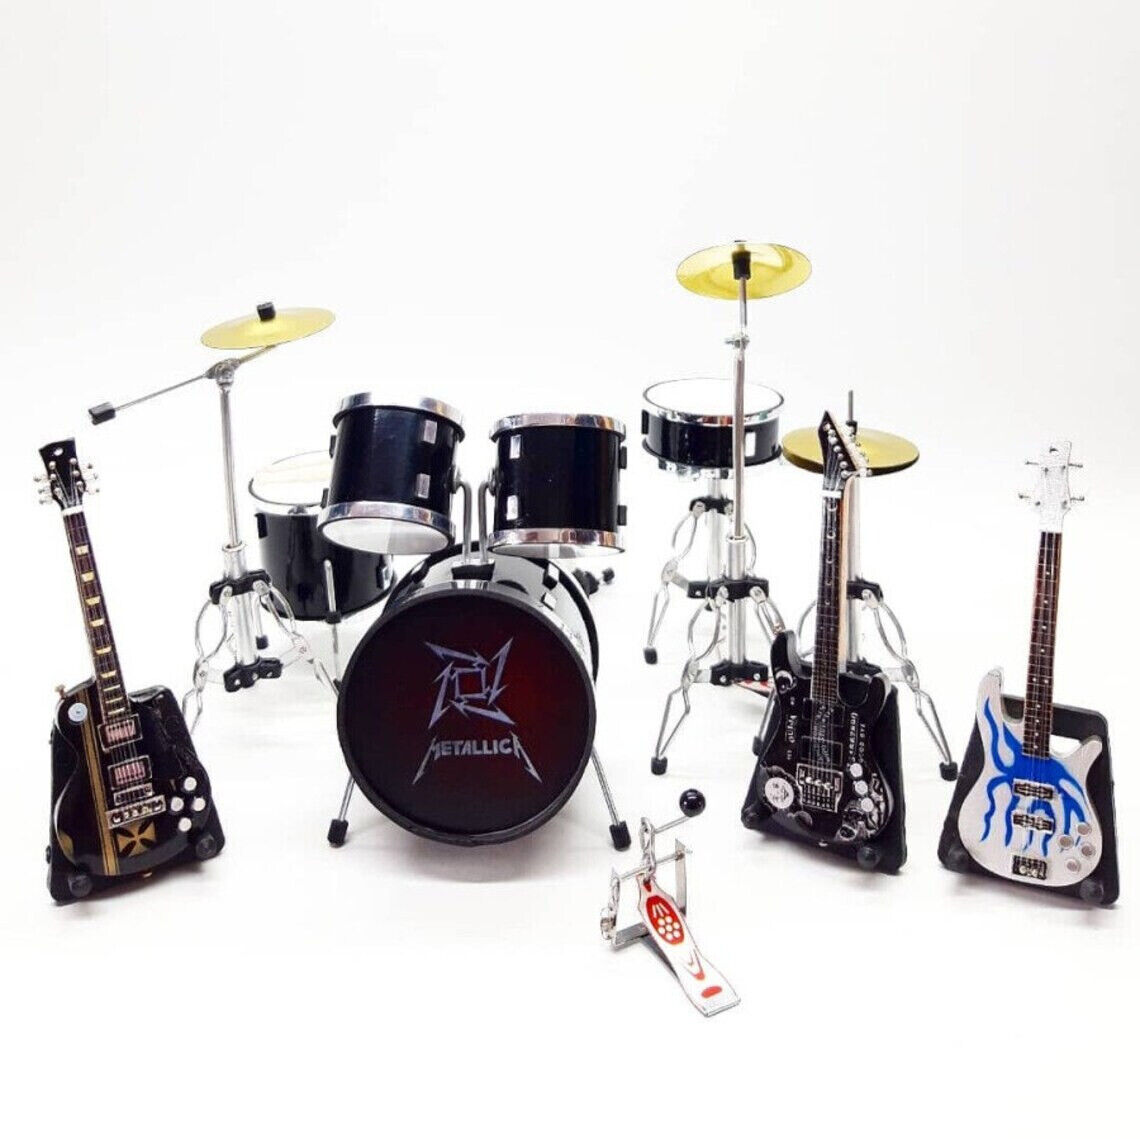 Miniature Drum Set 3 Guitars Black Metal Rock Instrument Band Gift Scale 1:12